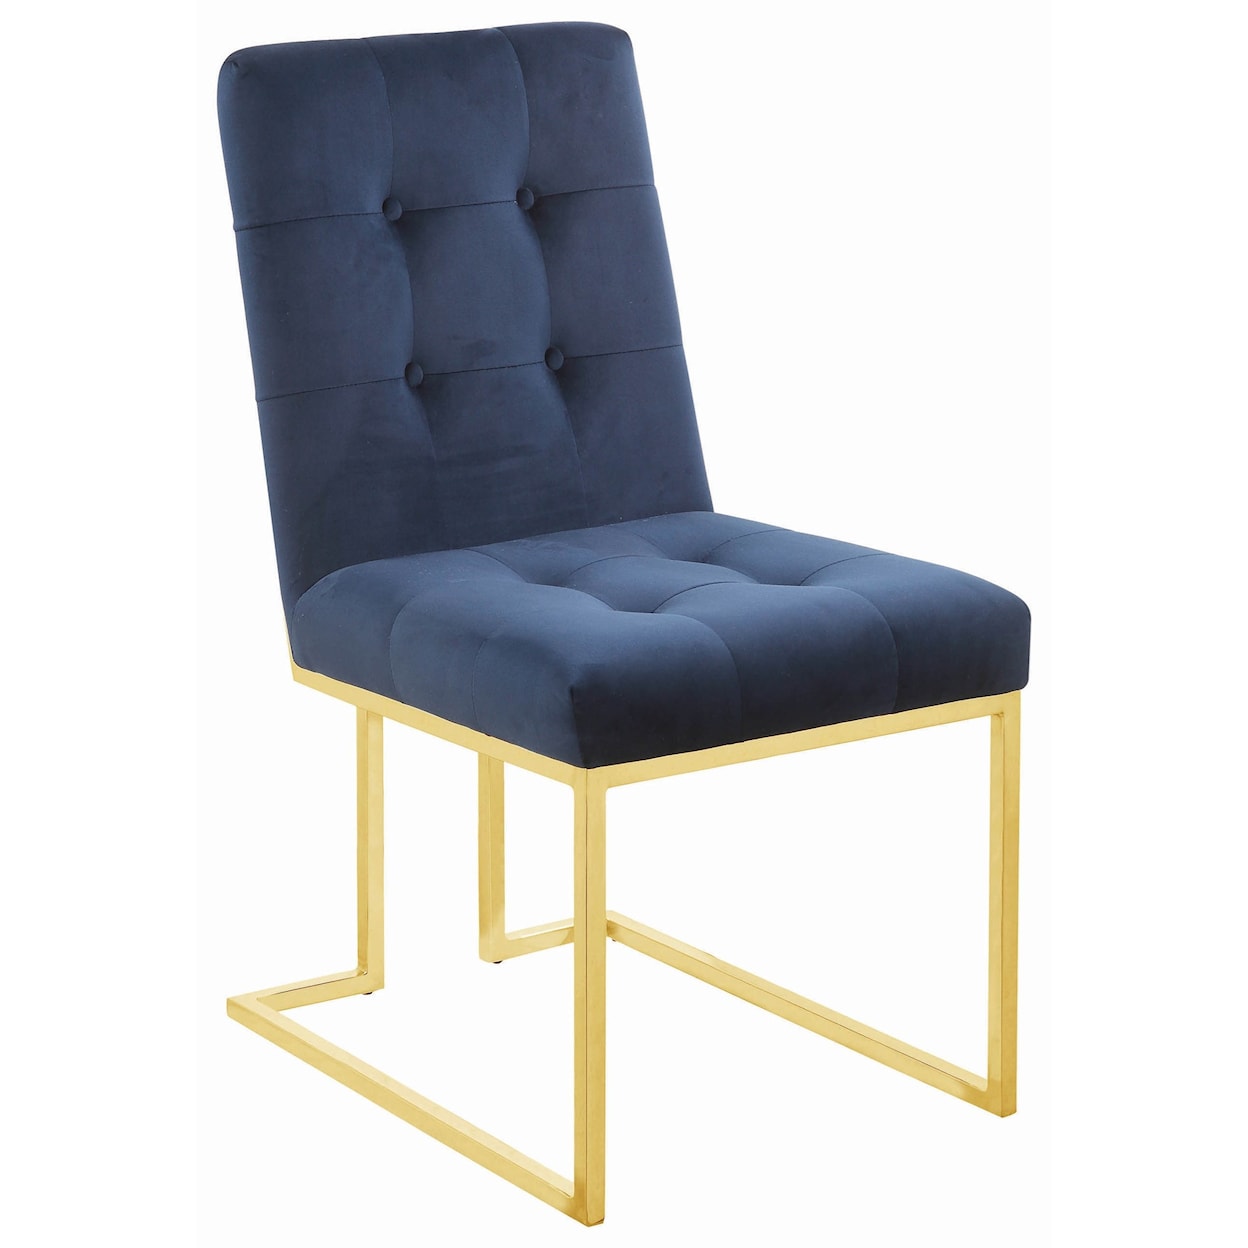 Michael Alan CSR Select Evianna Five Piece Chair & Table Set